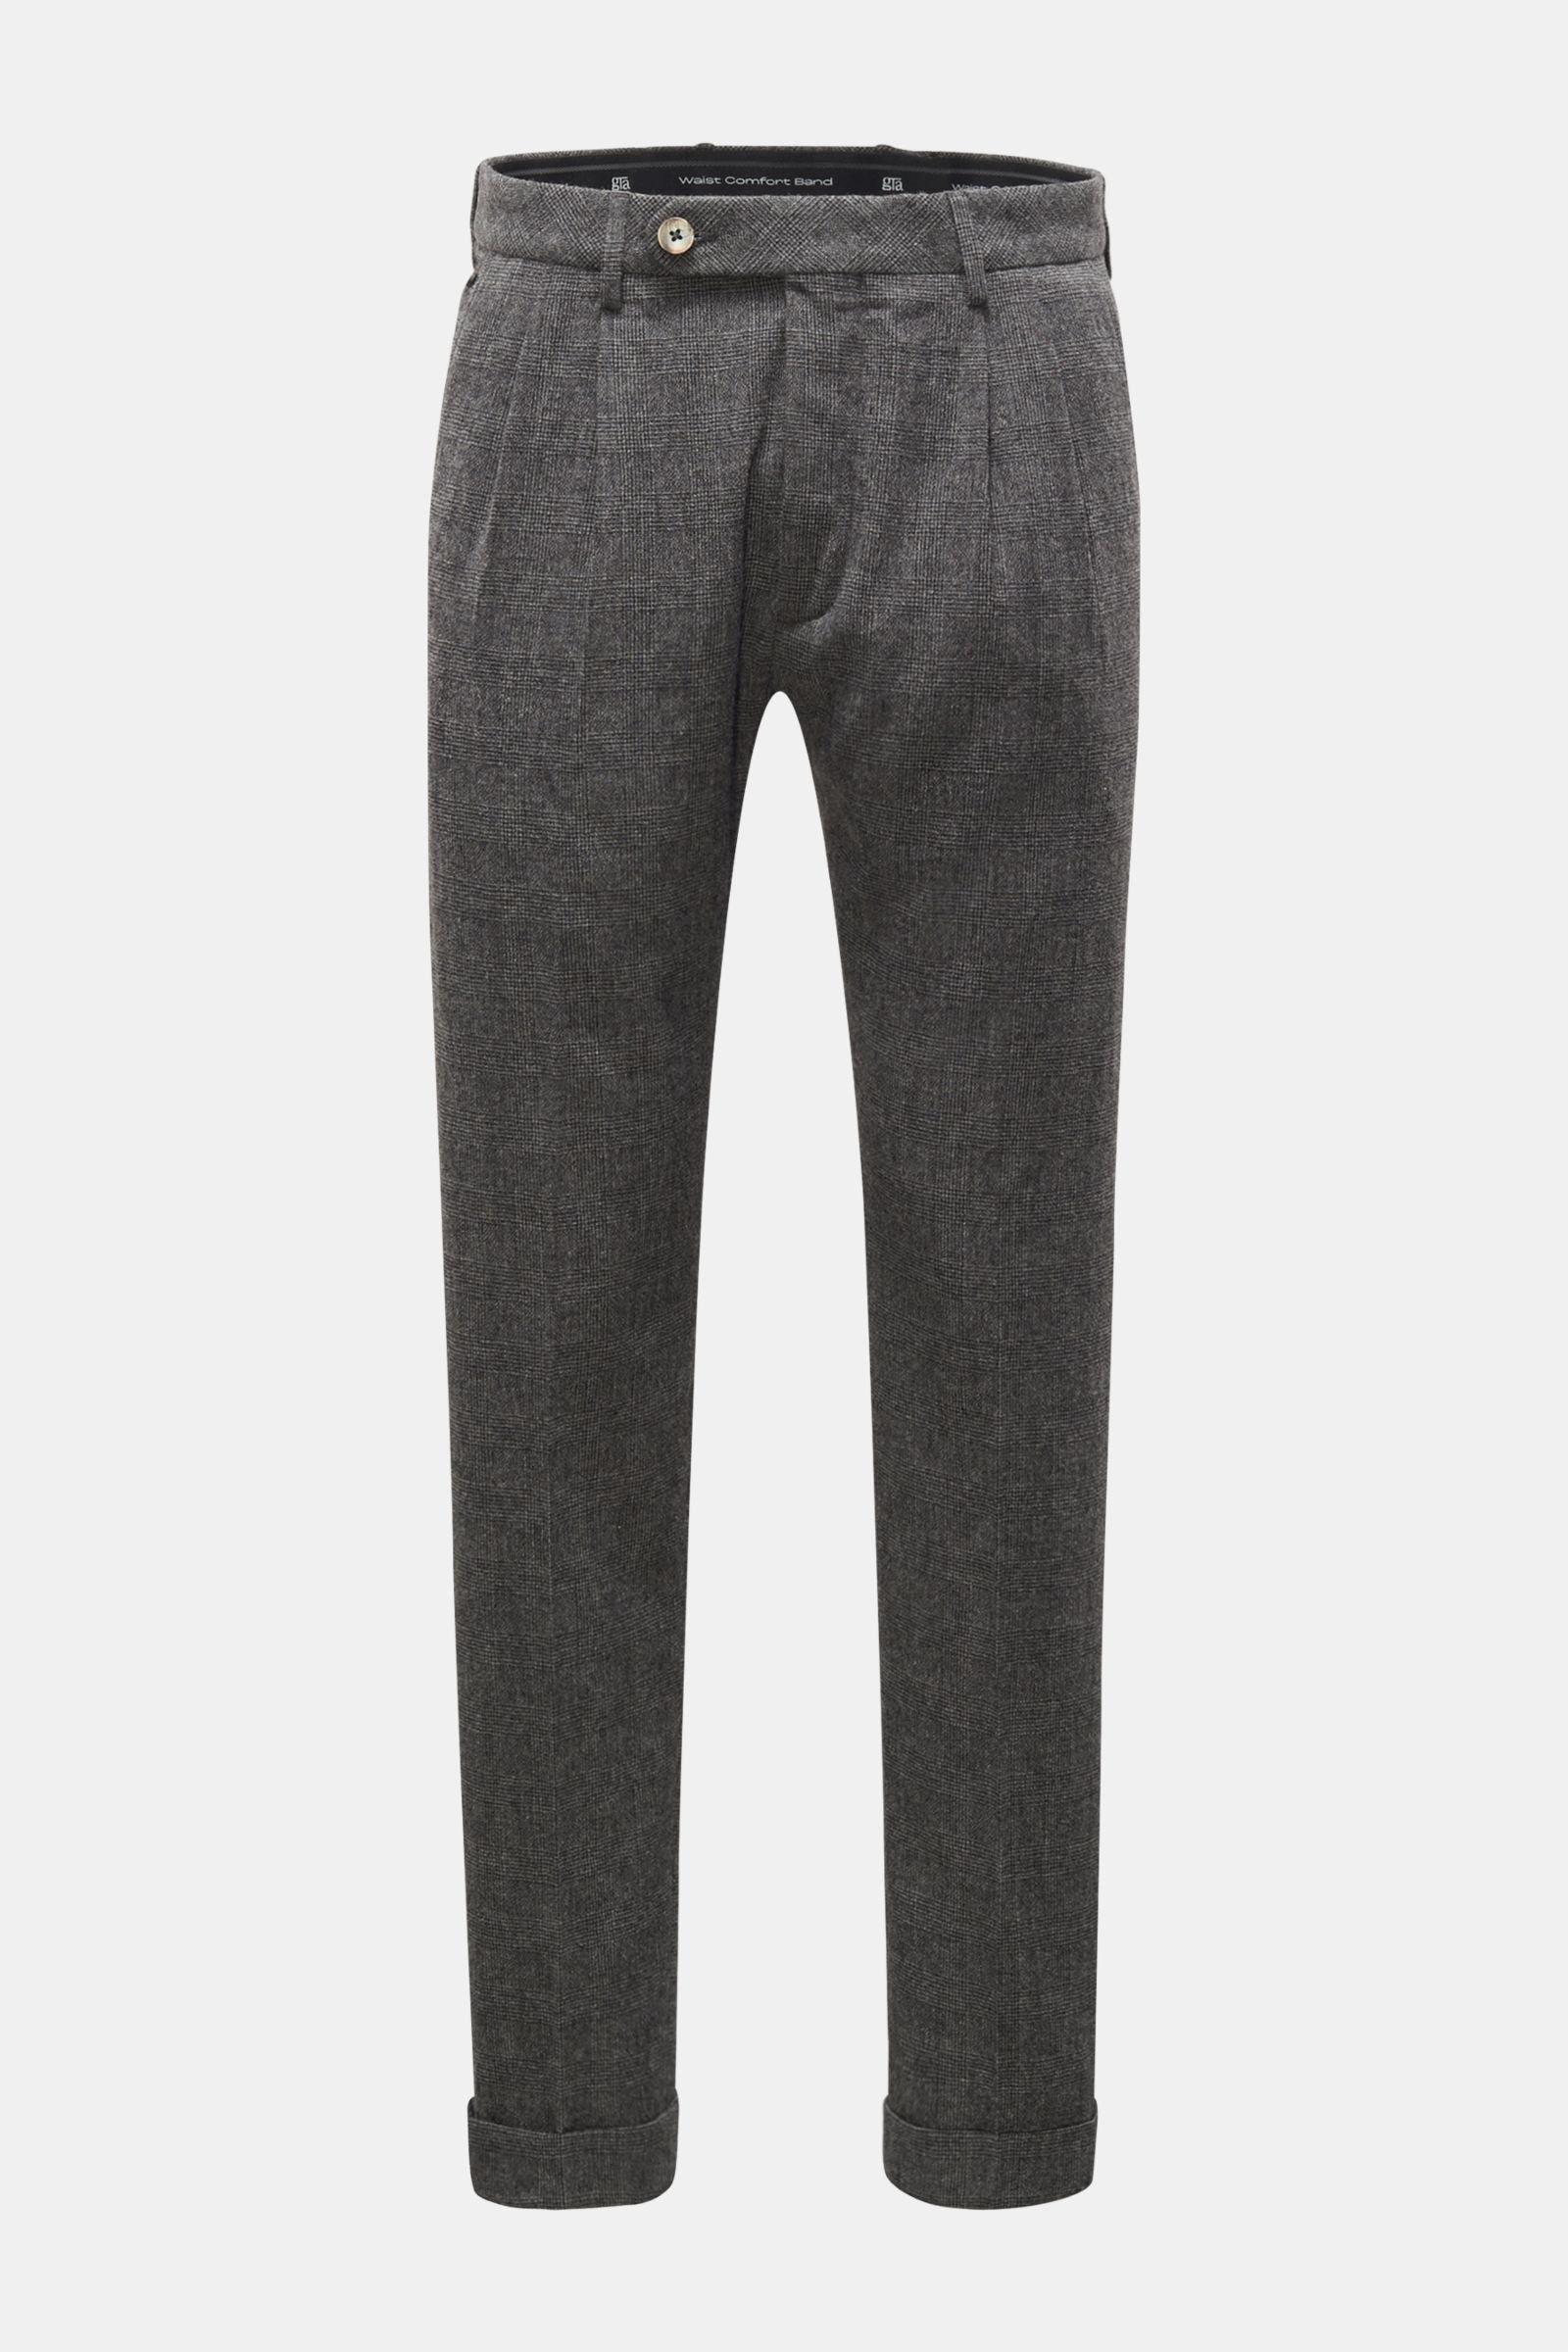 Wool trousers 'Luca' dark grey checked